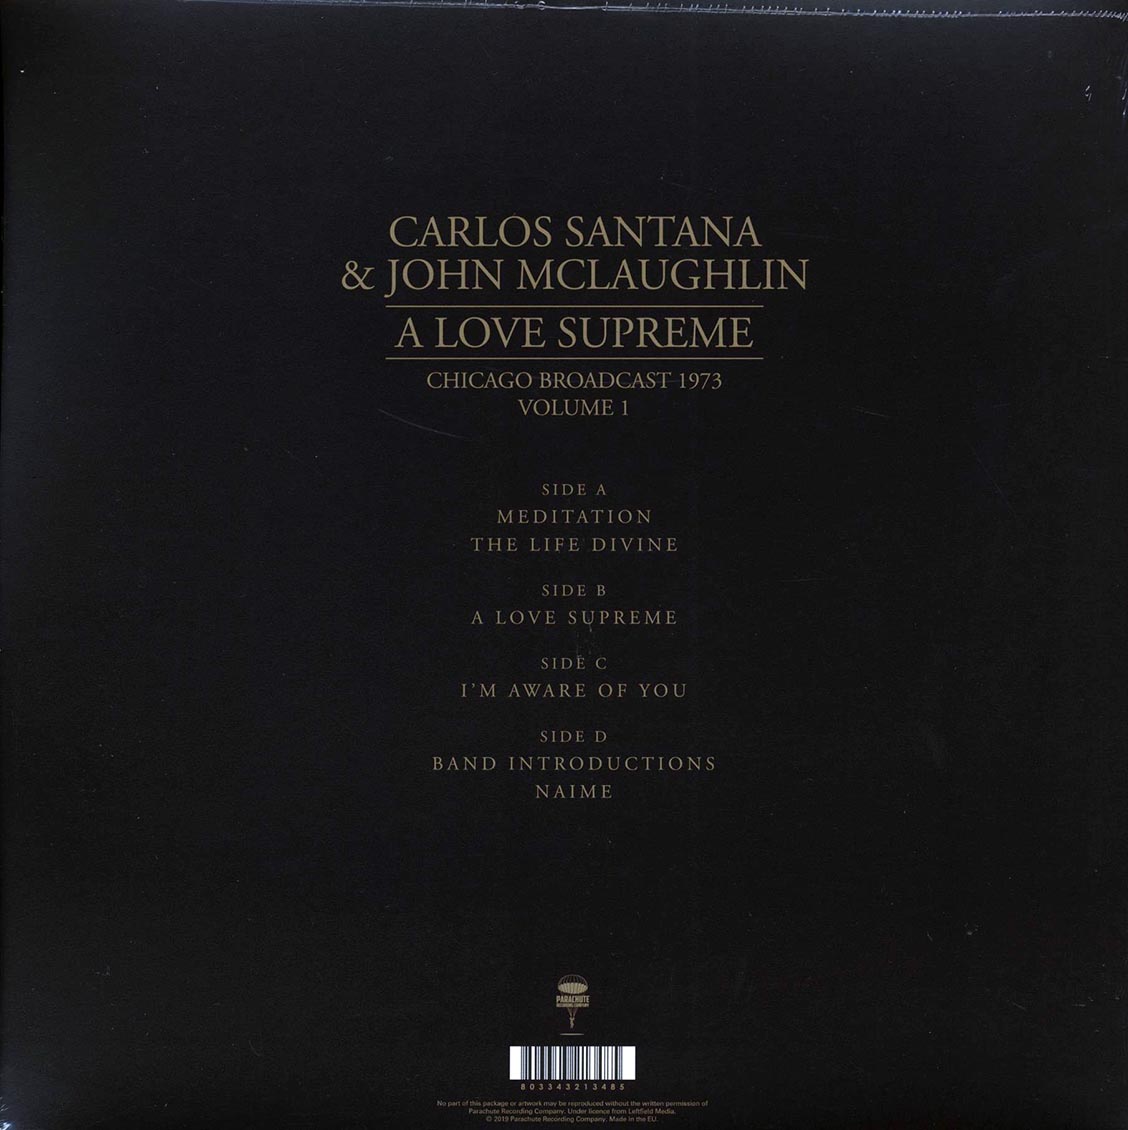 Carlos Santana, John McLaughlin - A Love Supreme Volume 1: Chicago Broadcast 1973